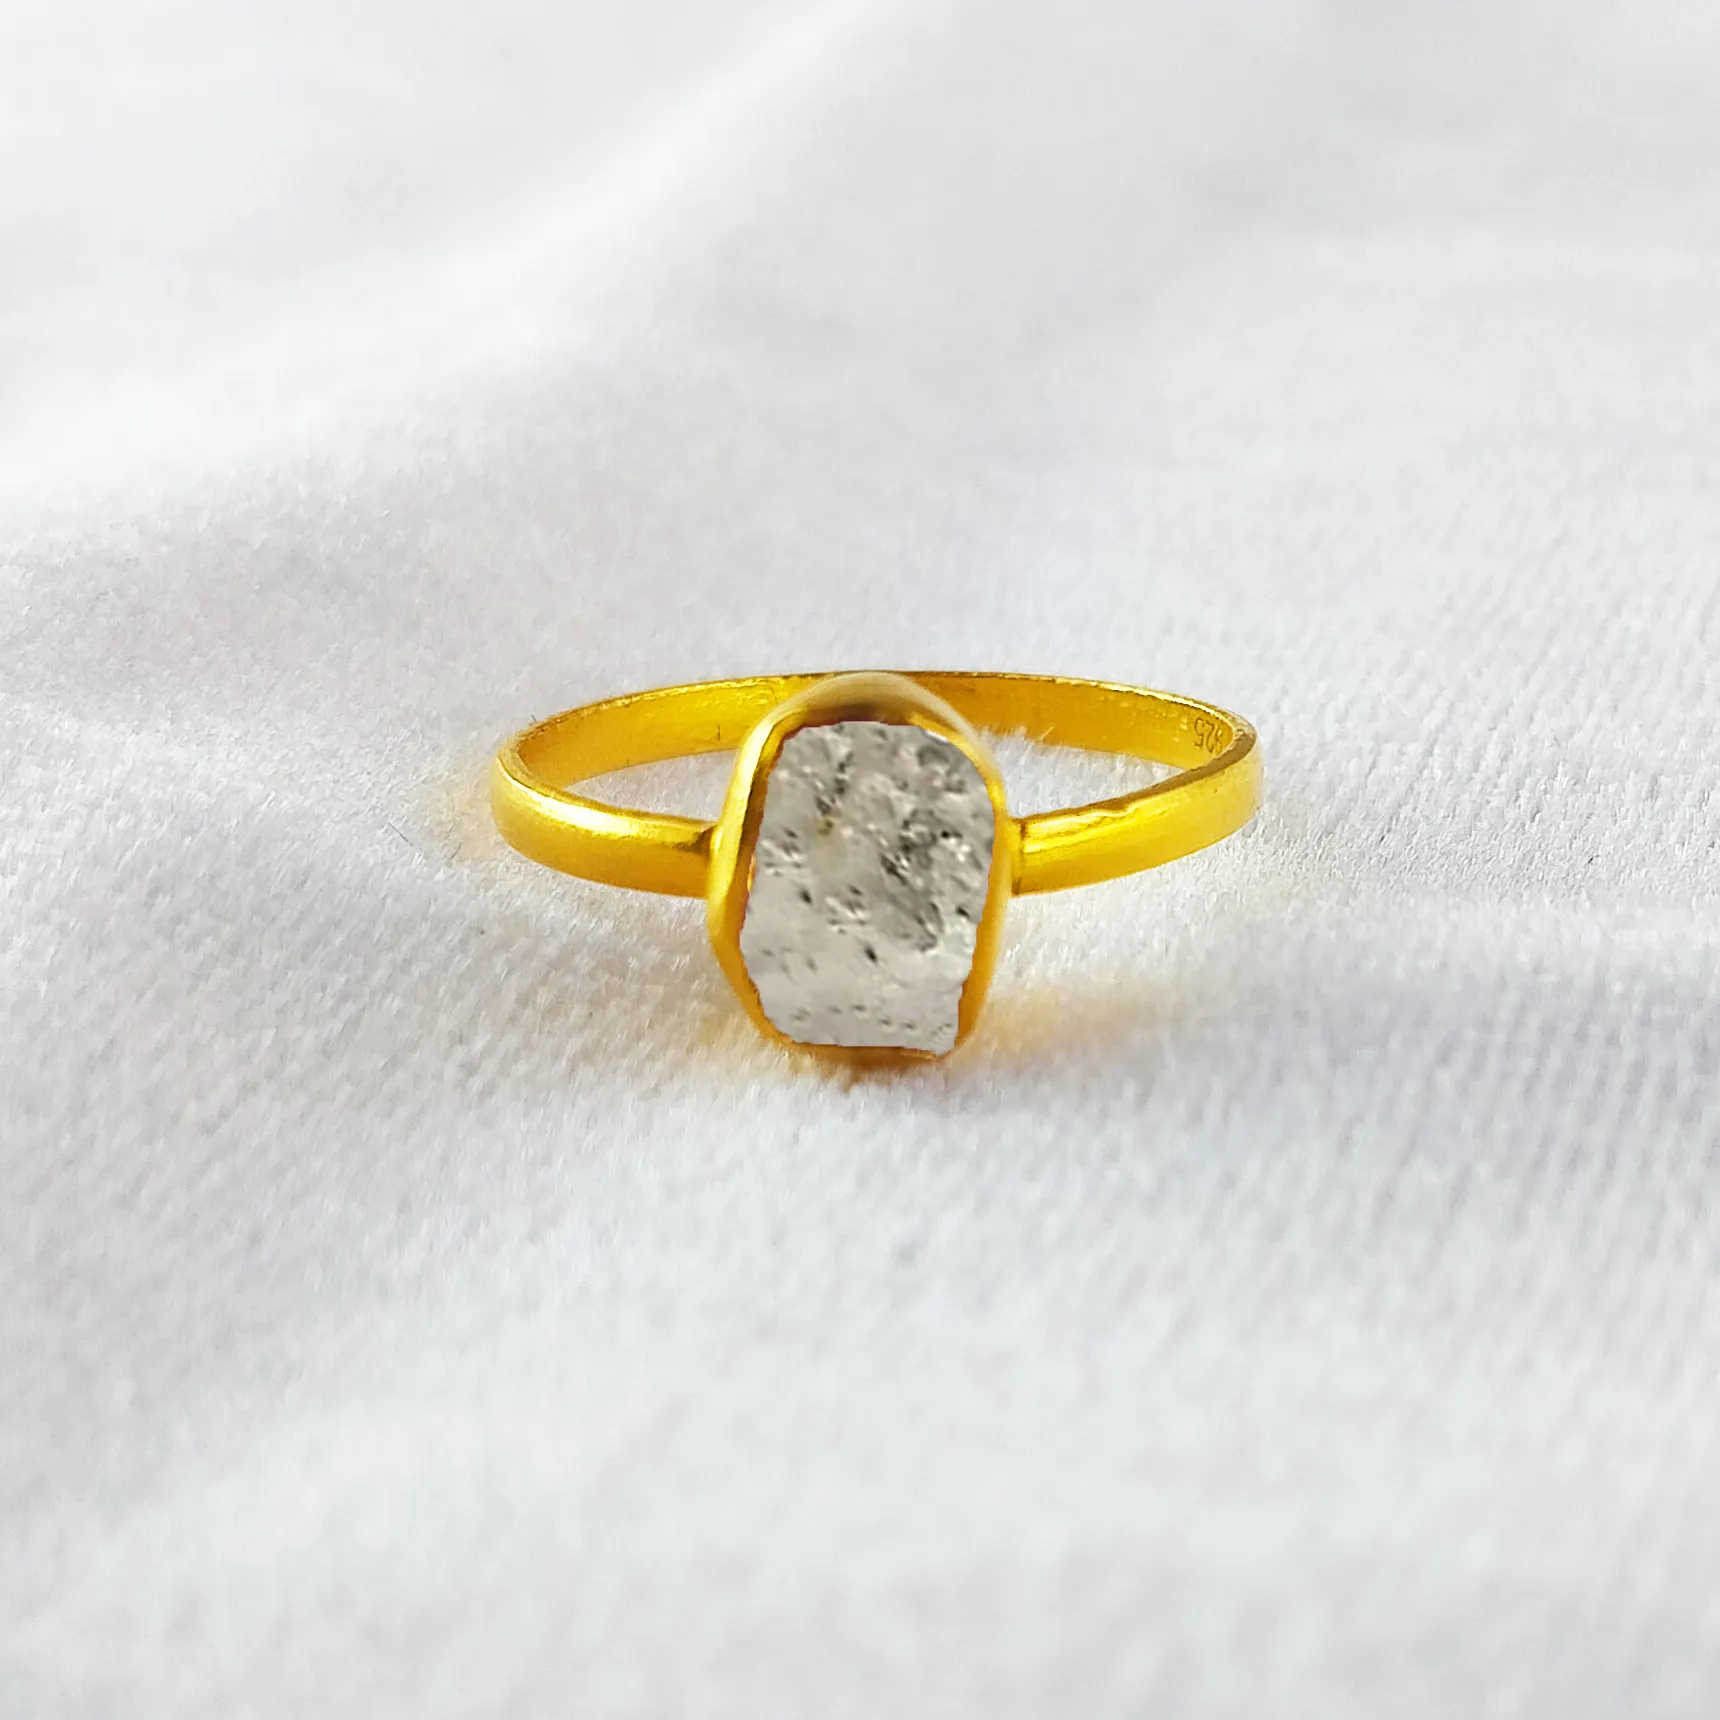 Mese di aprile Birthstone Herkimer Diamond Gemstone forma grezza 925 Sterling Silver Collate Setting Gold Vermeil Fine jewelry Rings